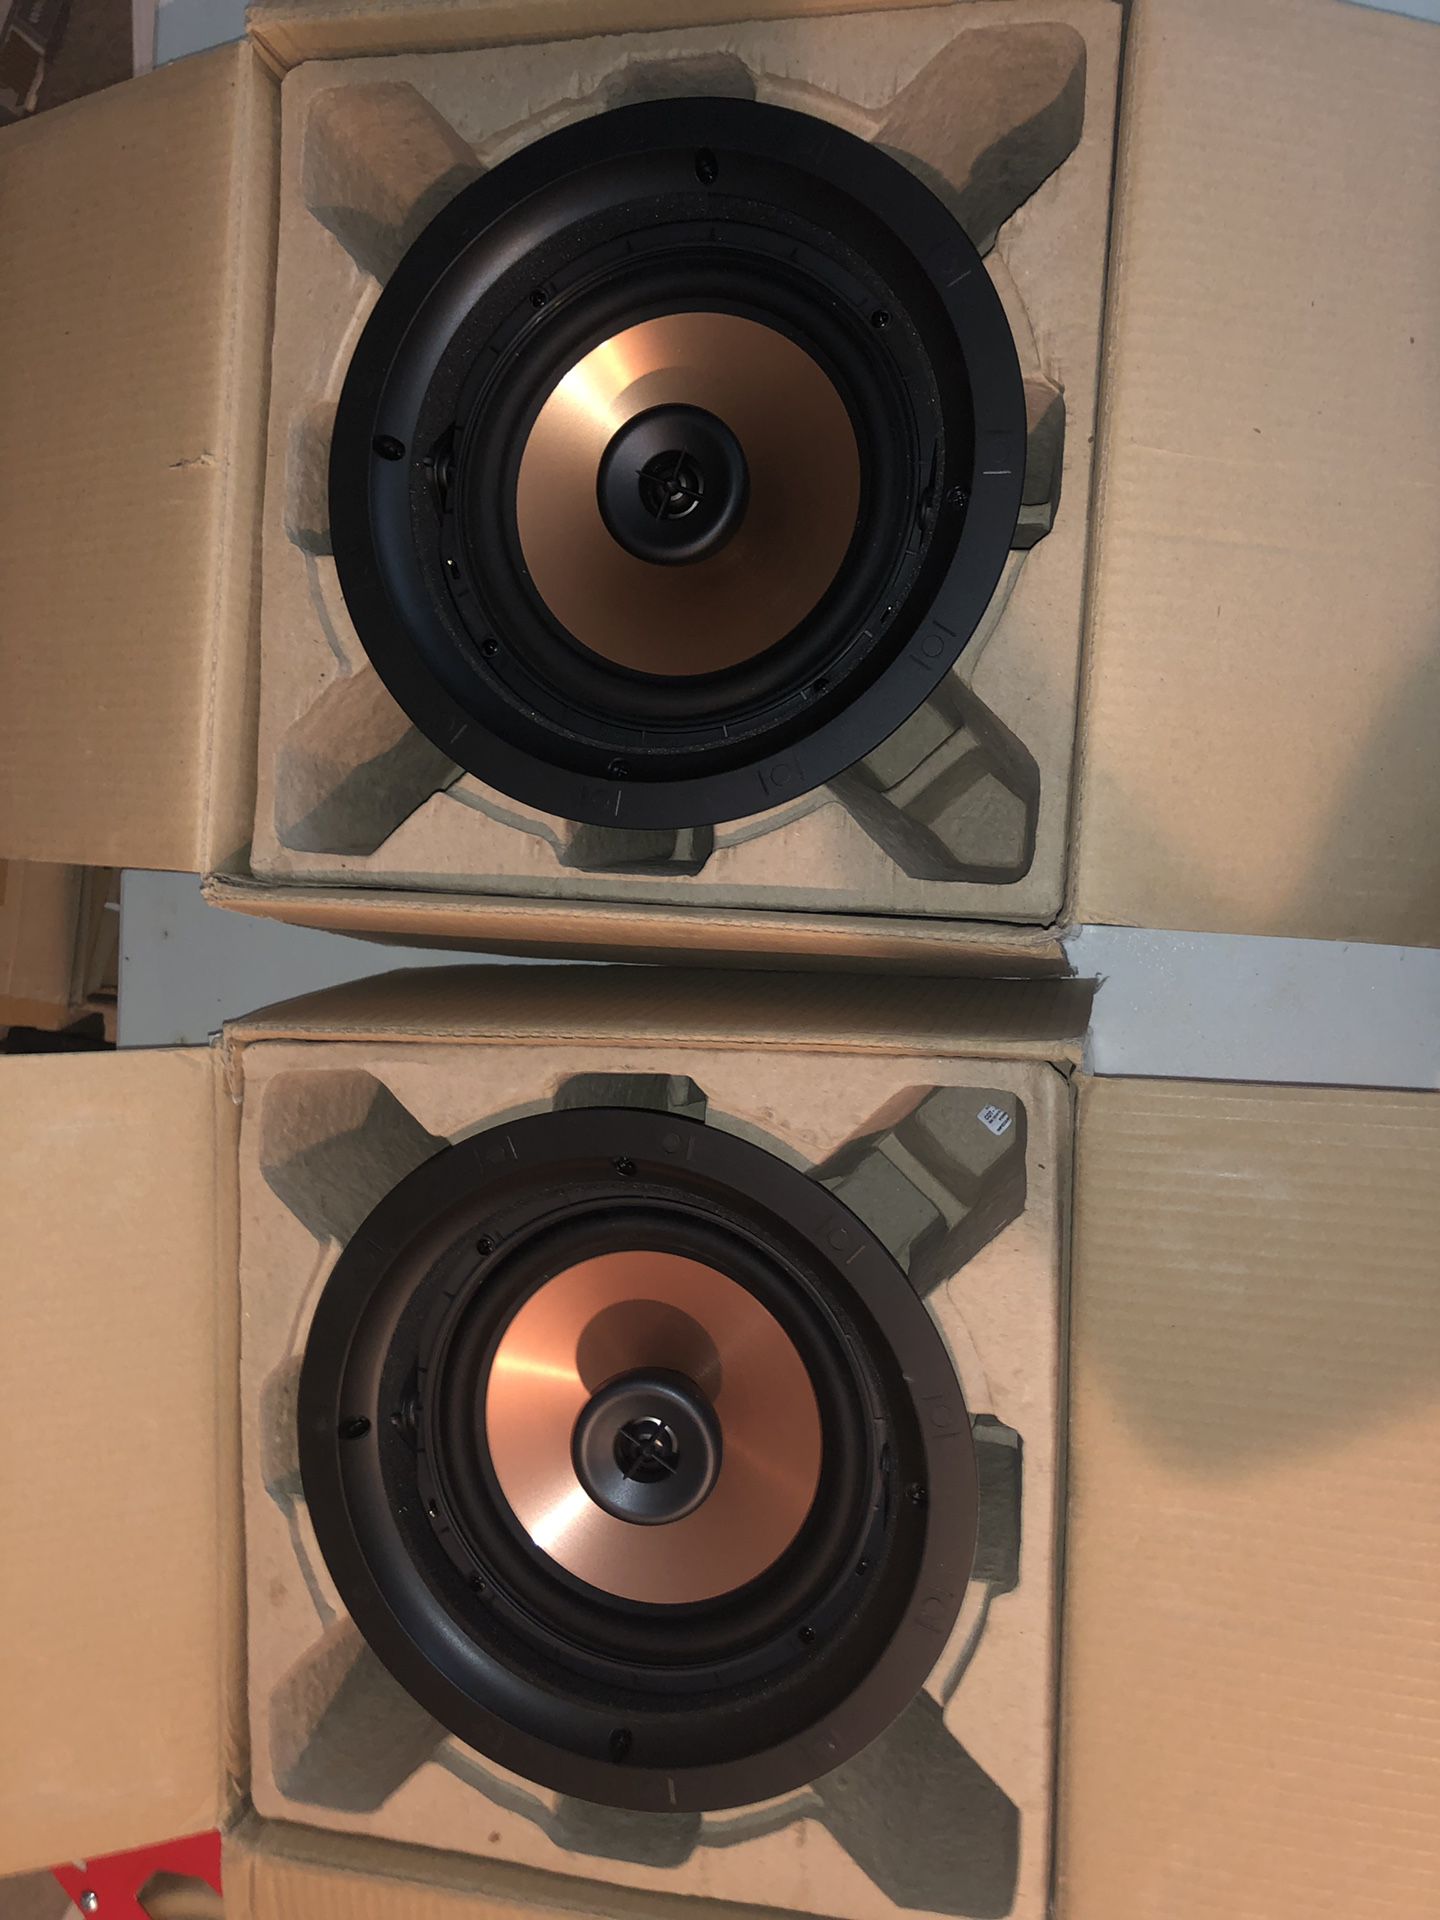 2 Klipsch CDT-5800-C II in ceiling speakers